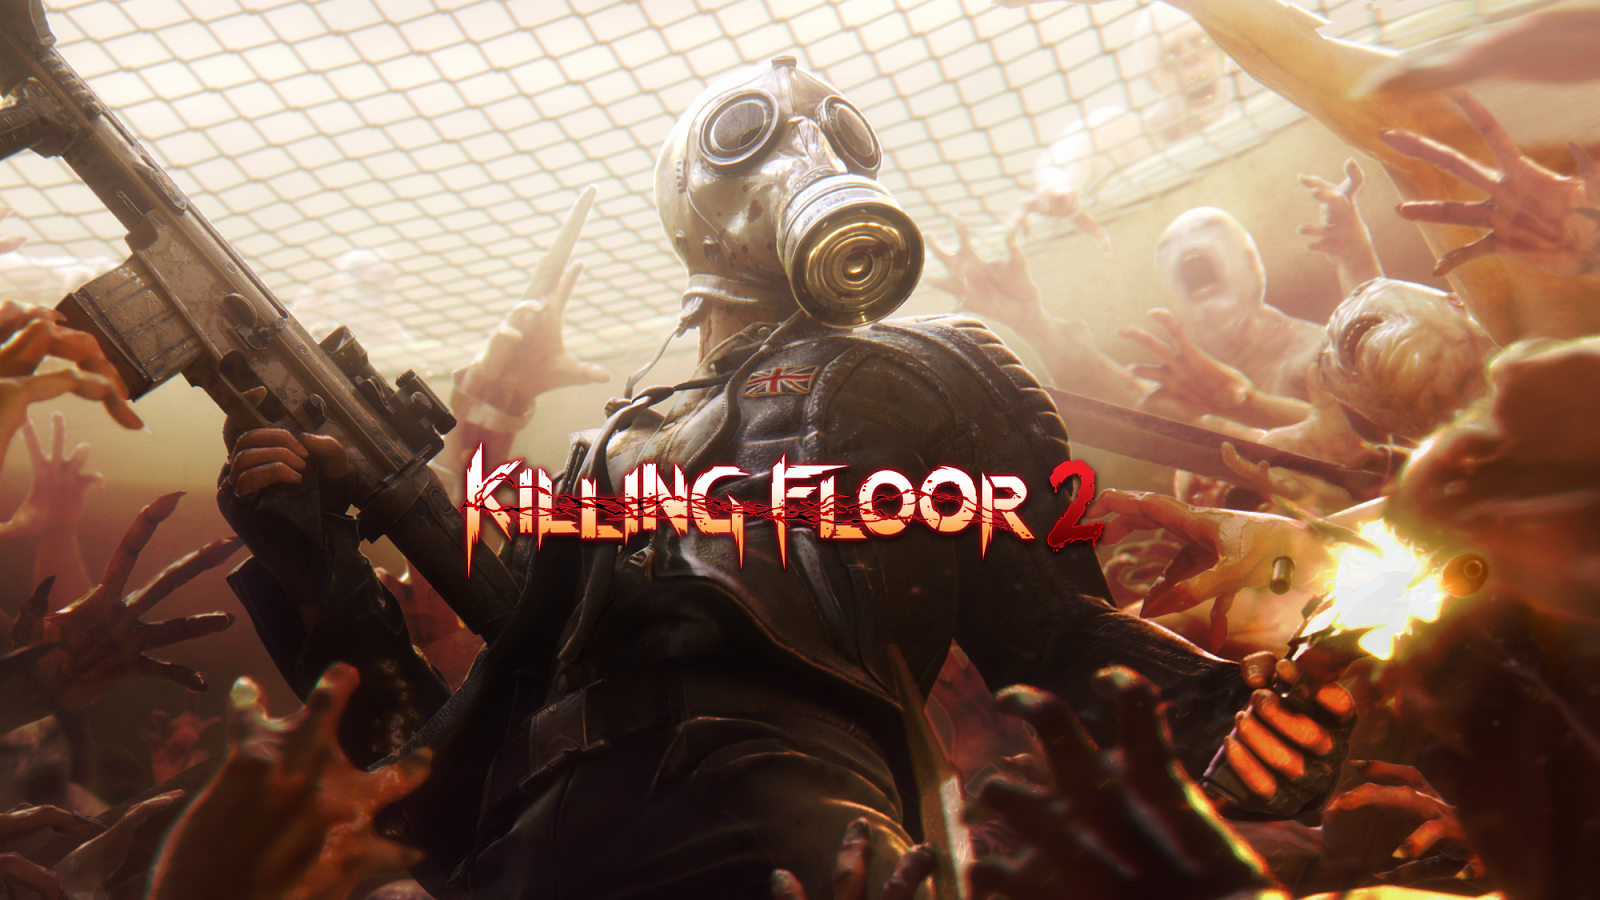 Killing floor 2 free download mac 2019